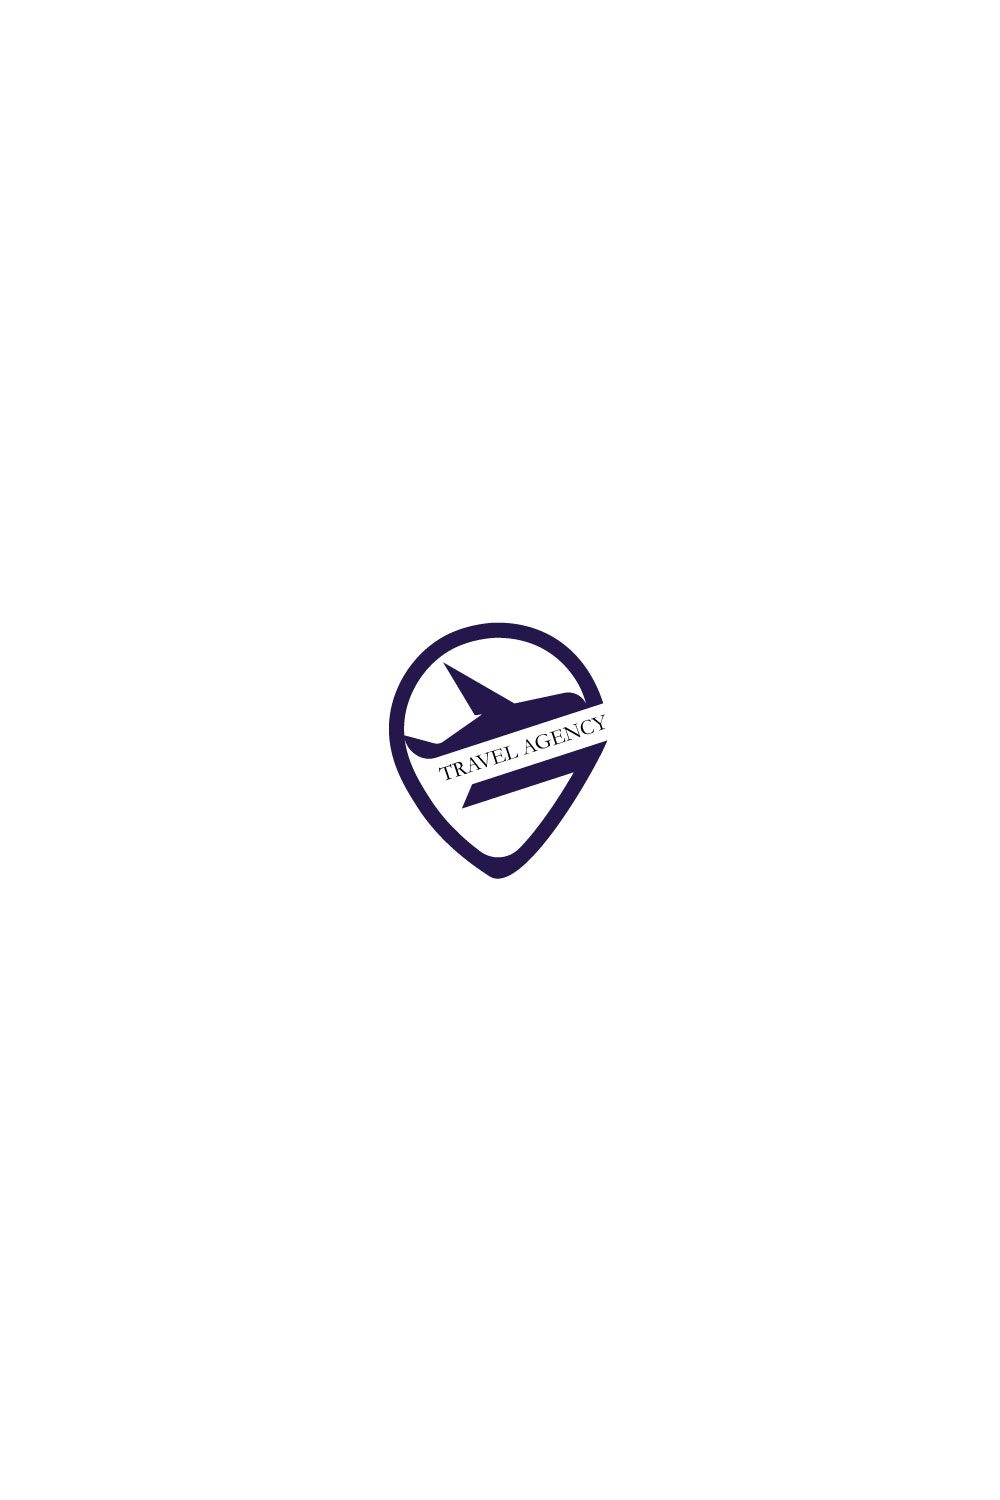 Travel agency logo design pinterest preview image.